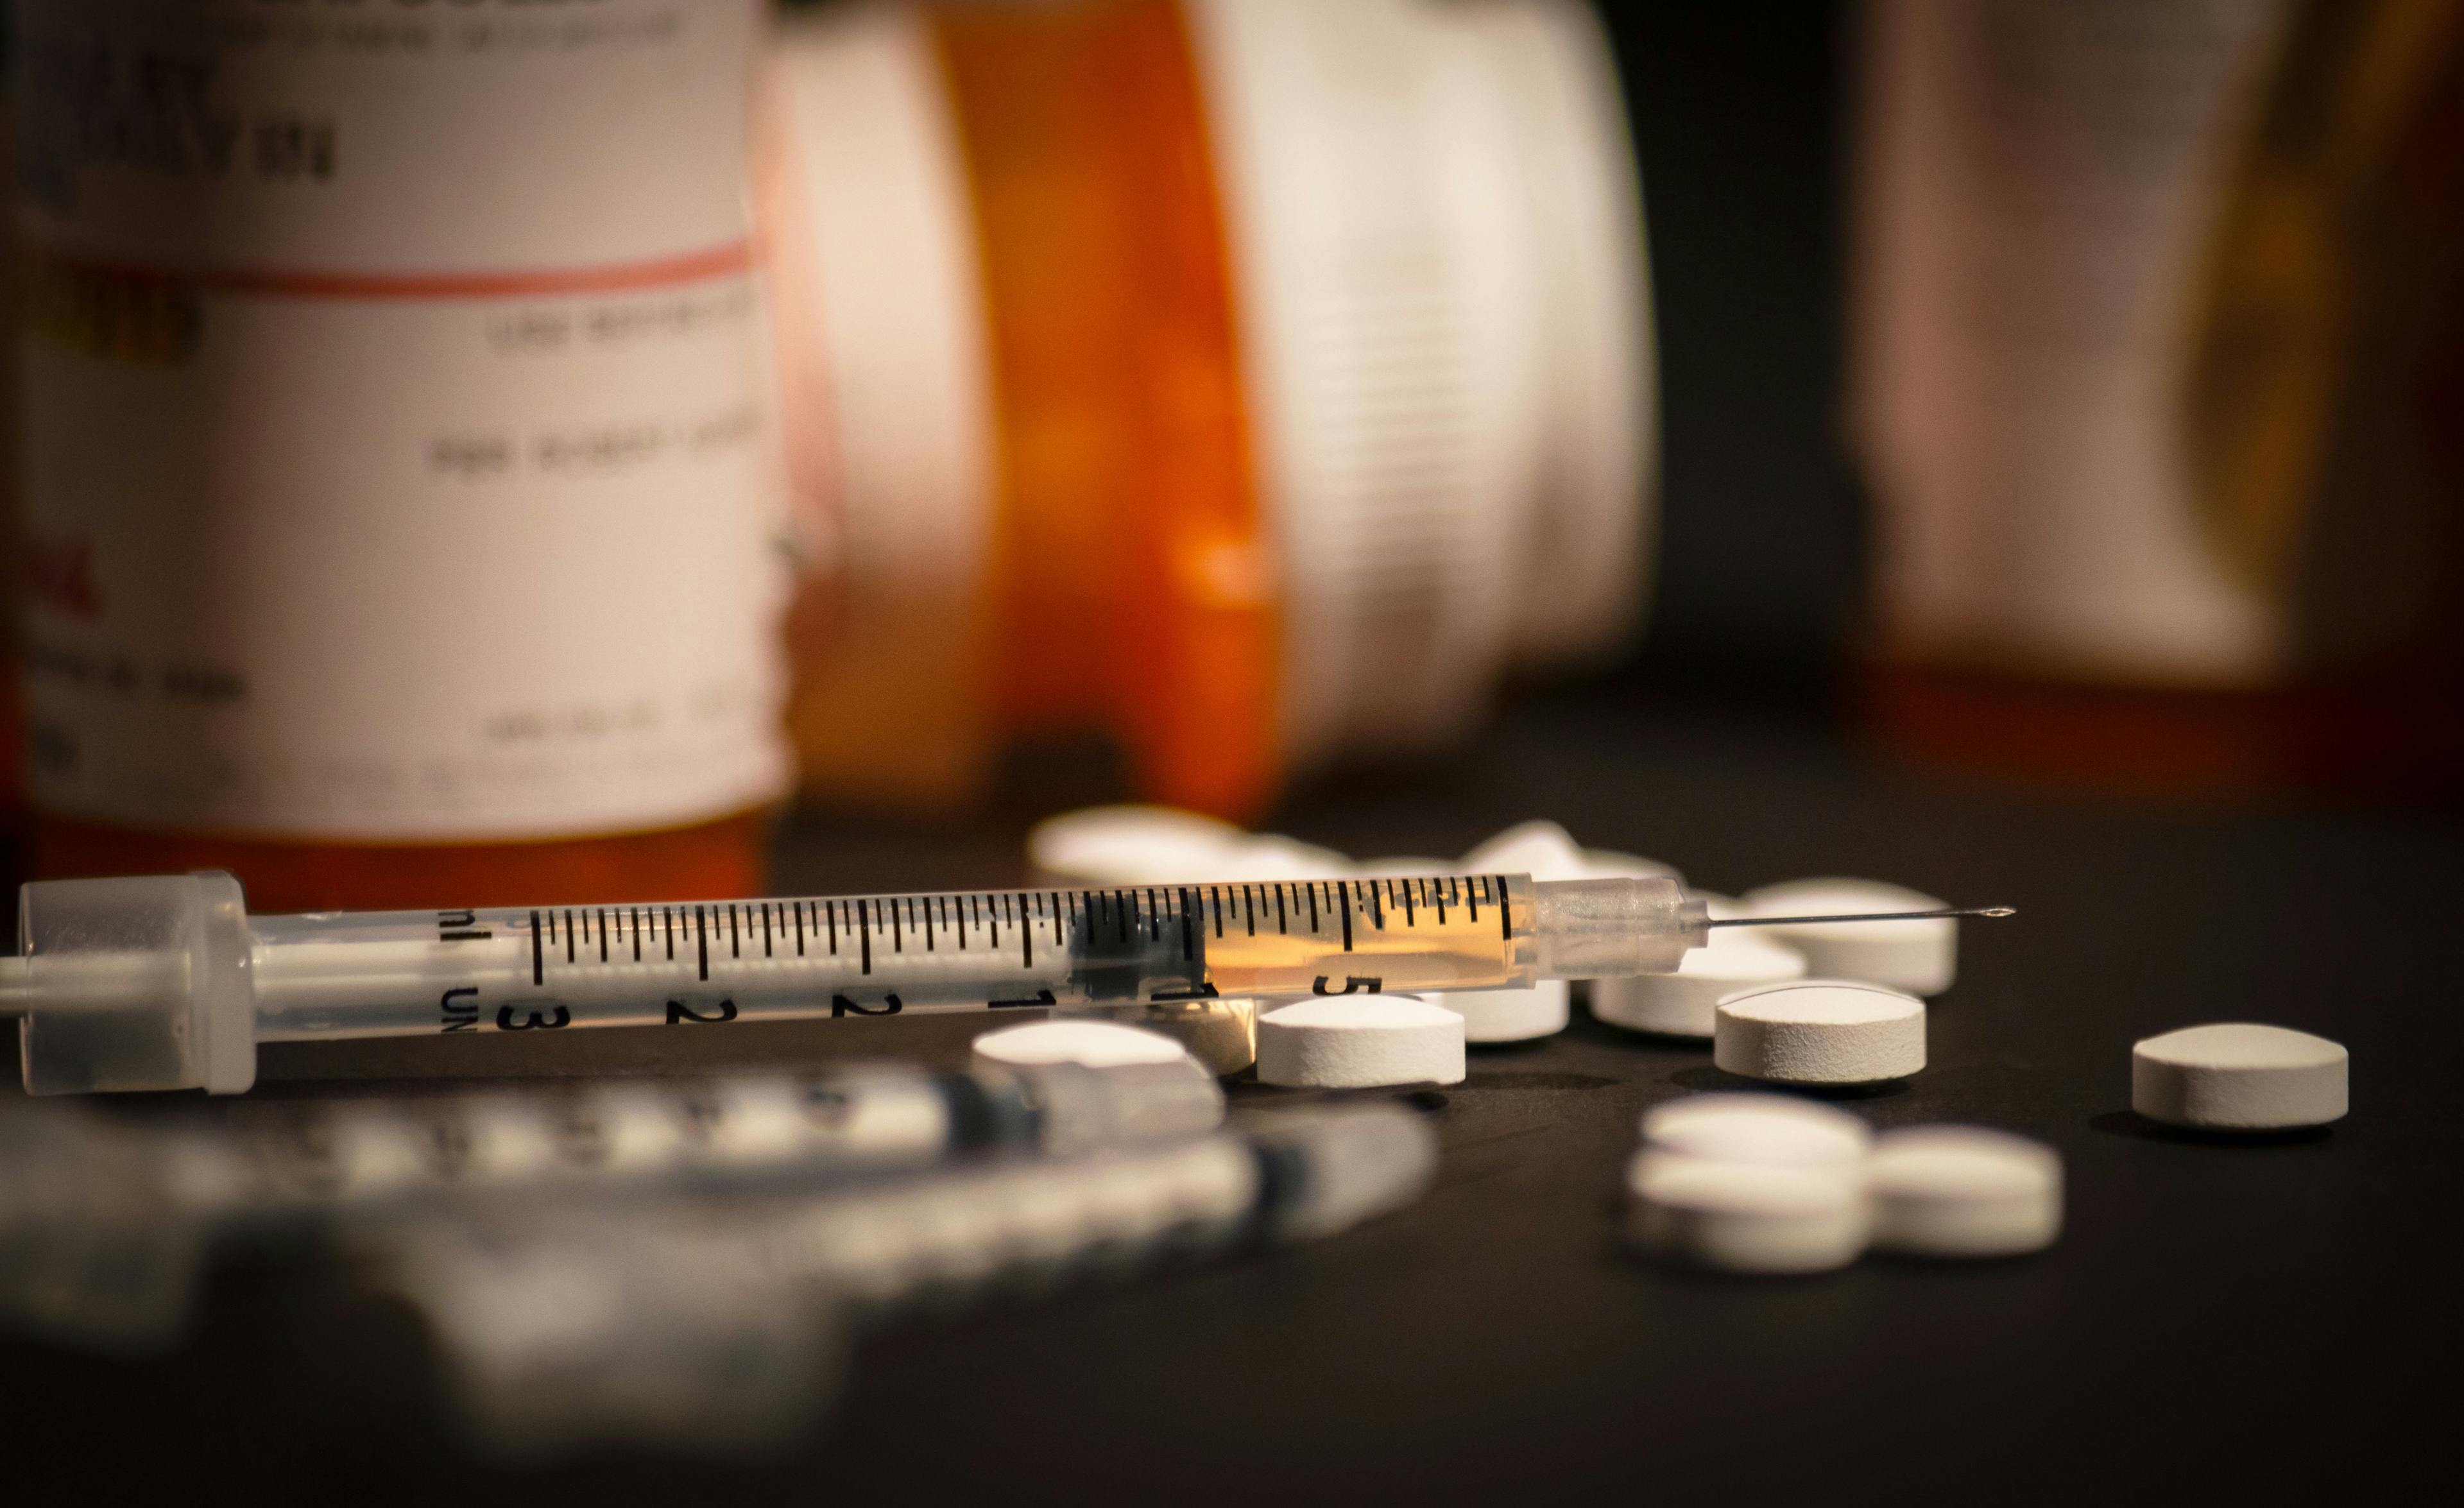 Loaded Syringe and Pills | Image credit: Darwin Brandis - stock.adobe.com